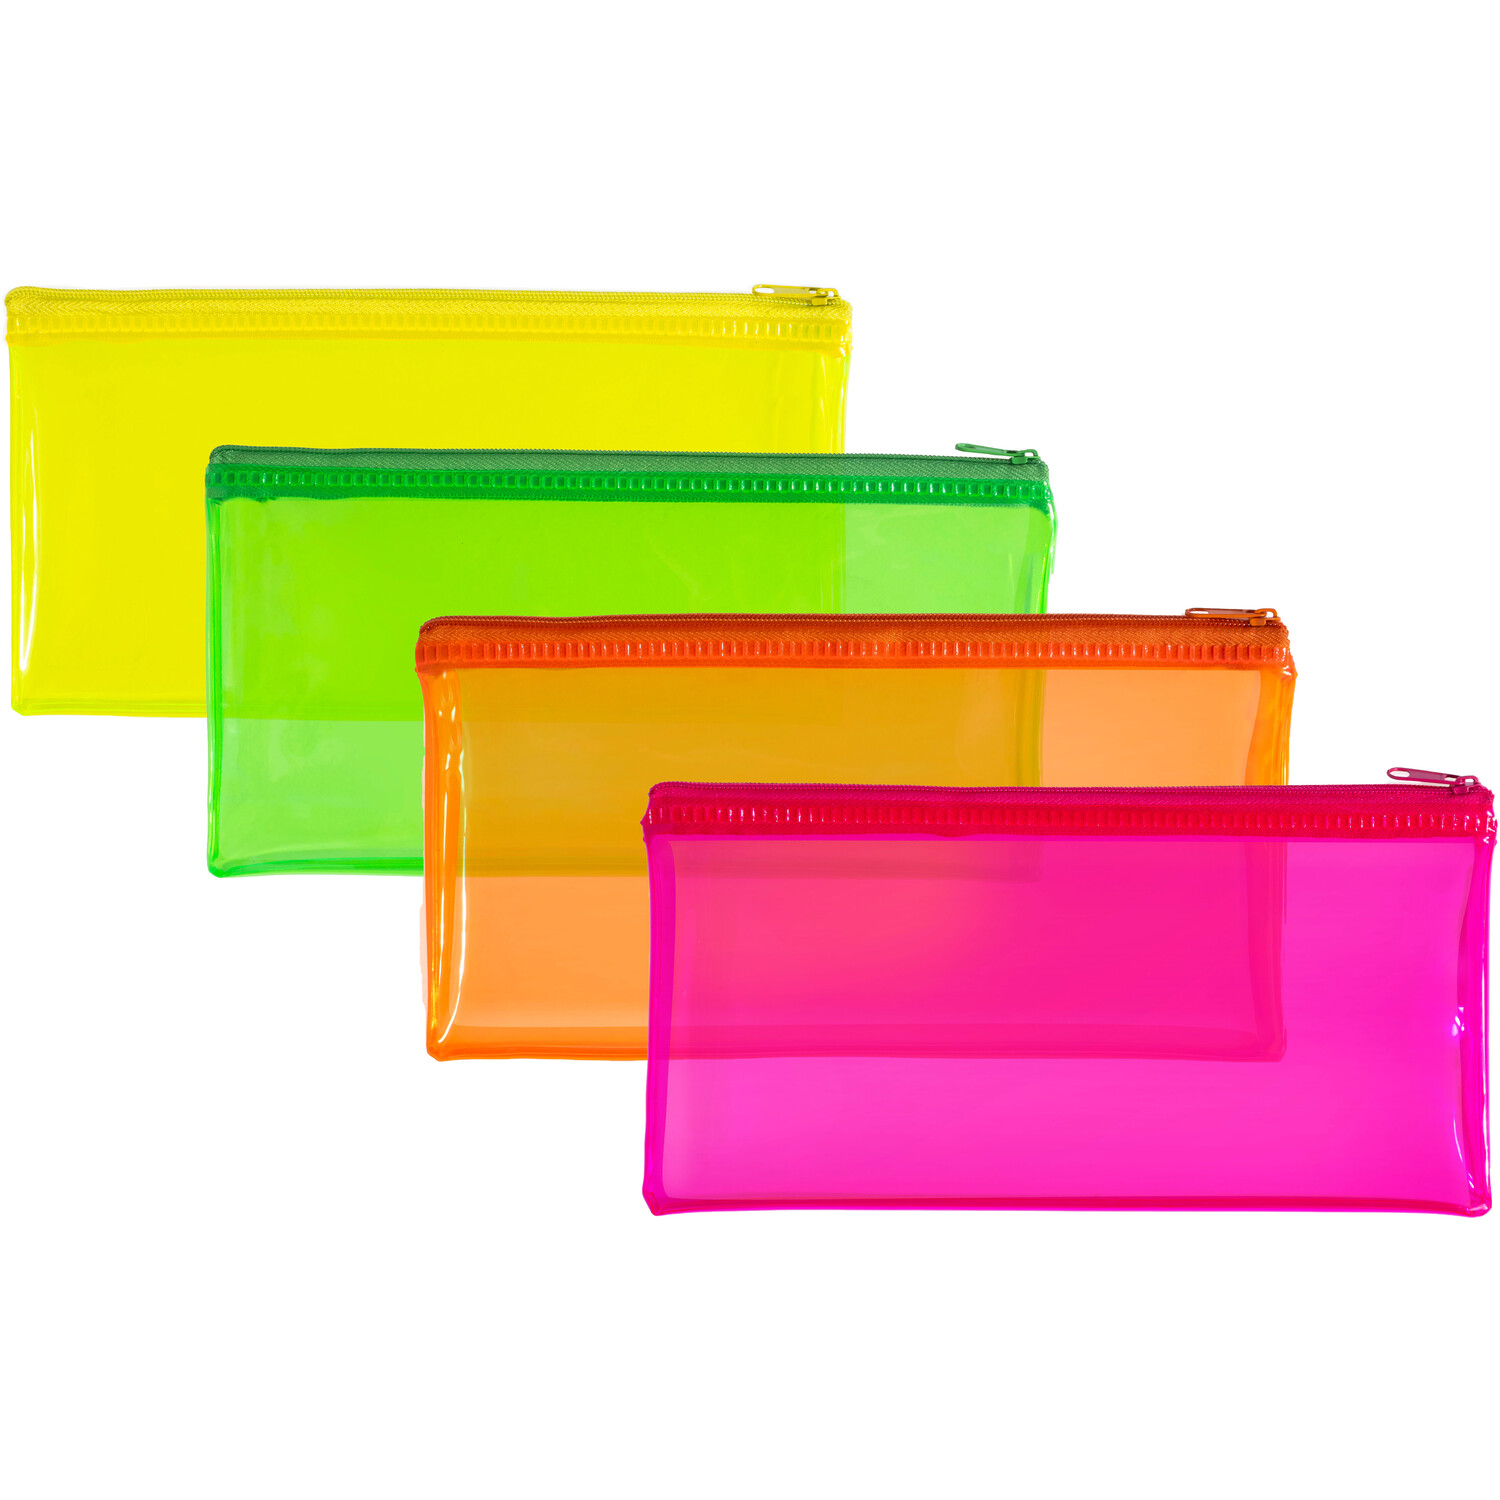 Rainbow Zip Bag  - Large Image 1